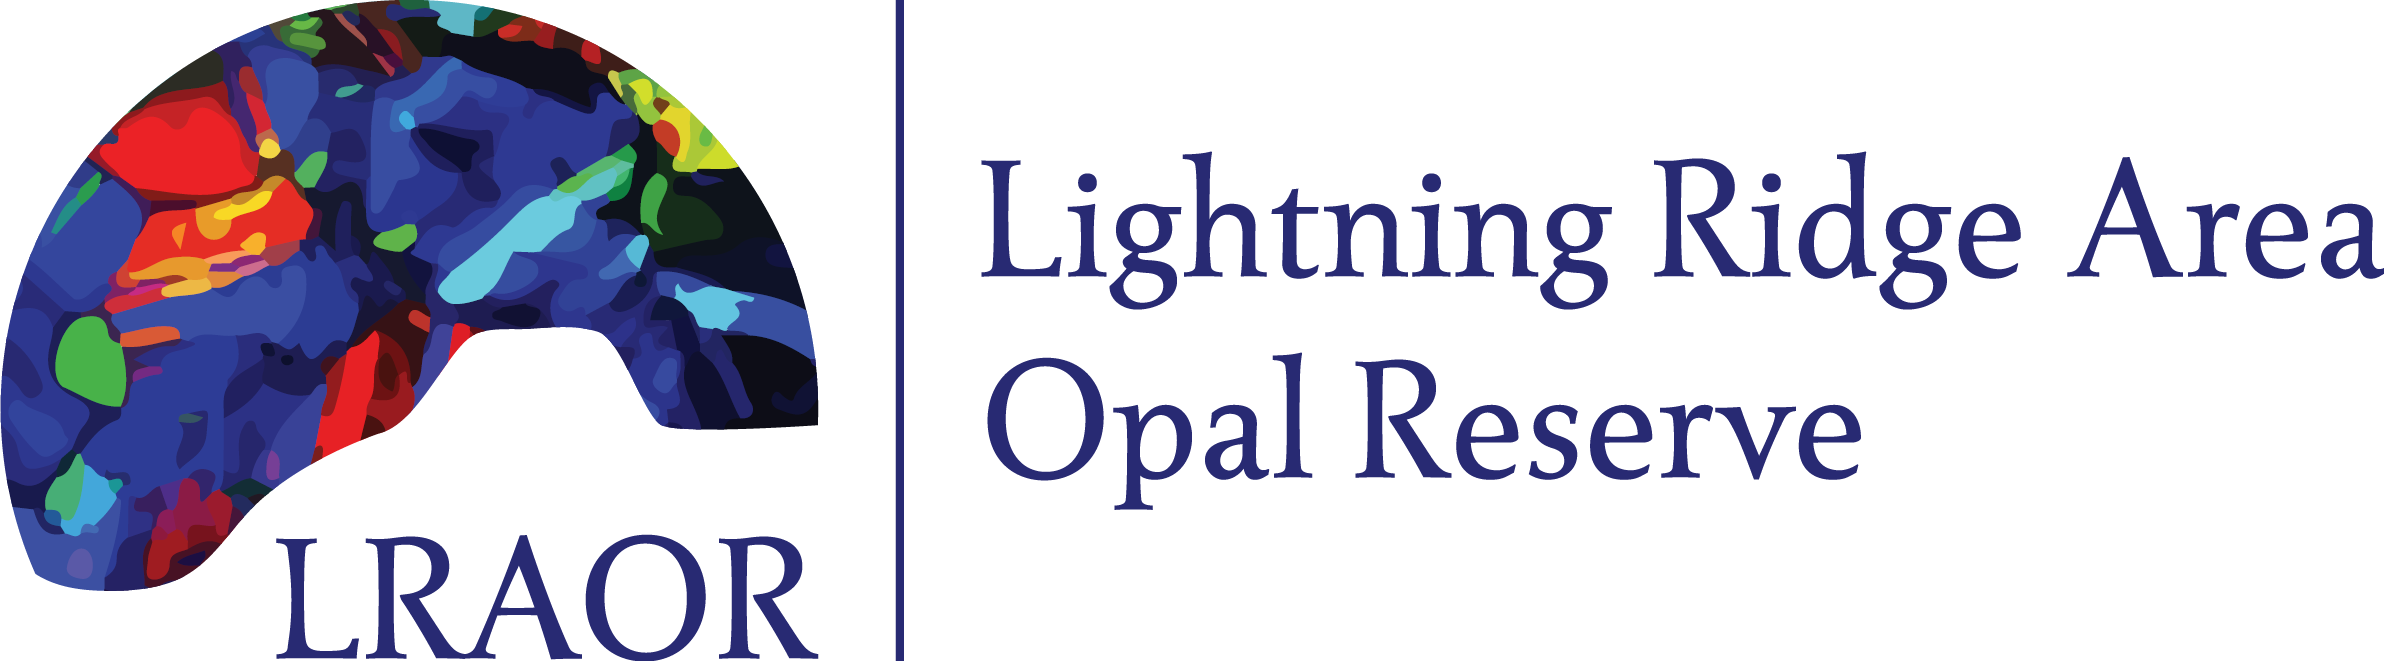 Lightning Ridge Area Opal Reserve